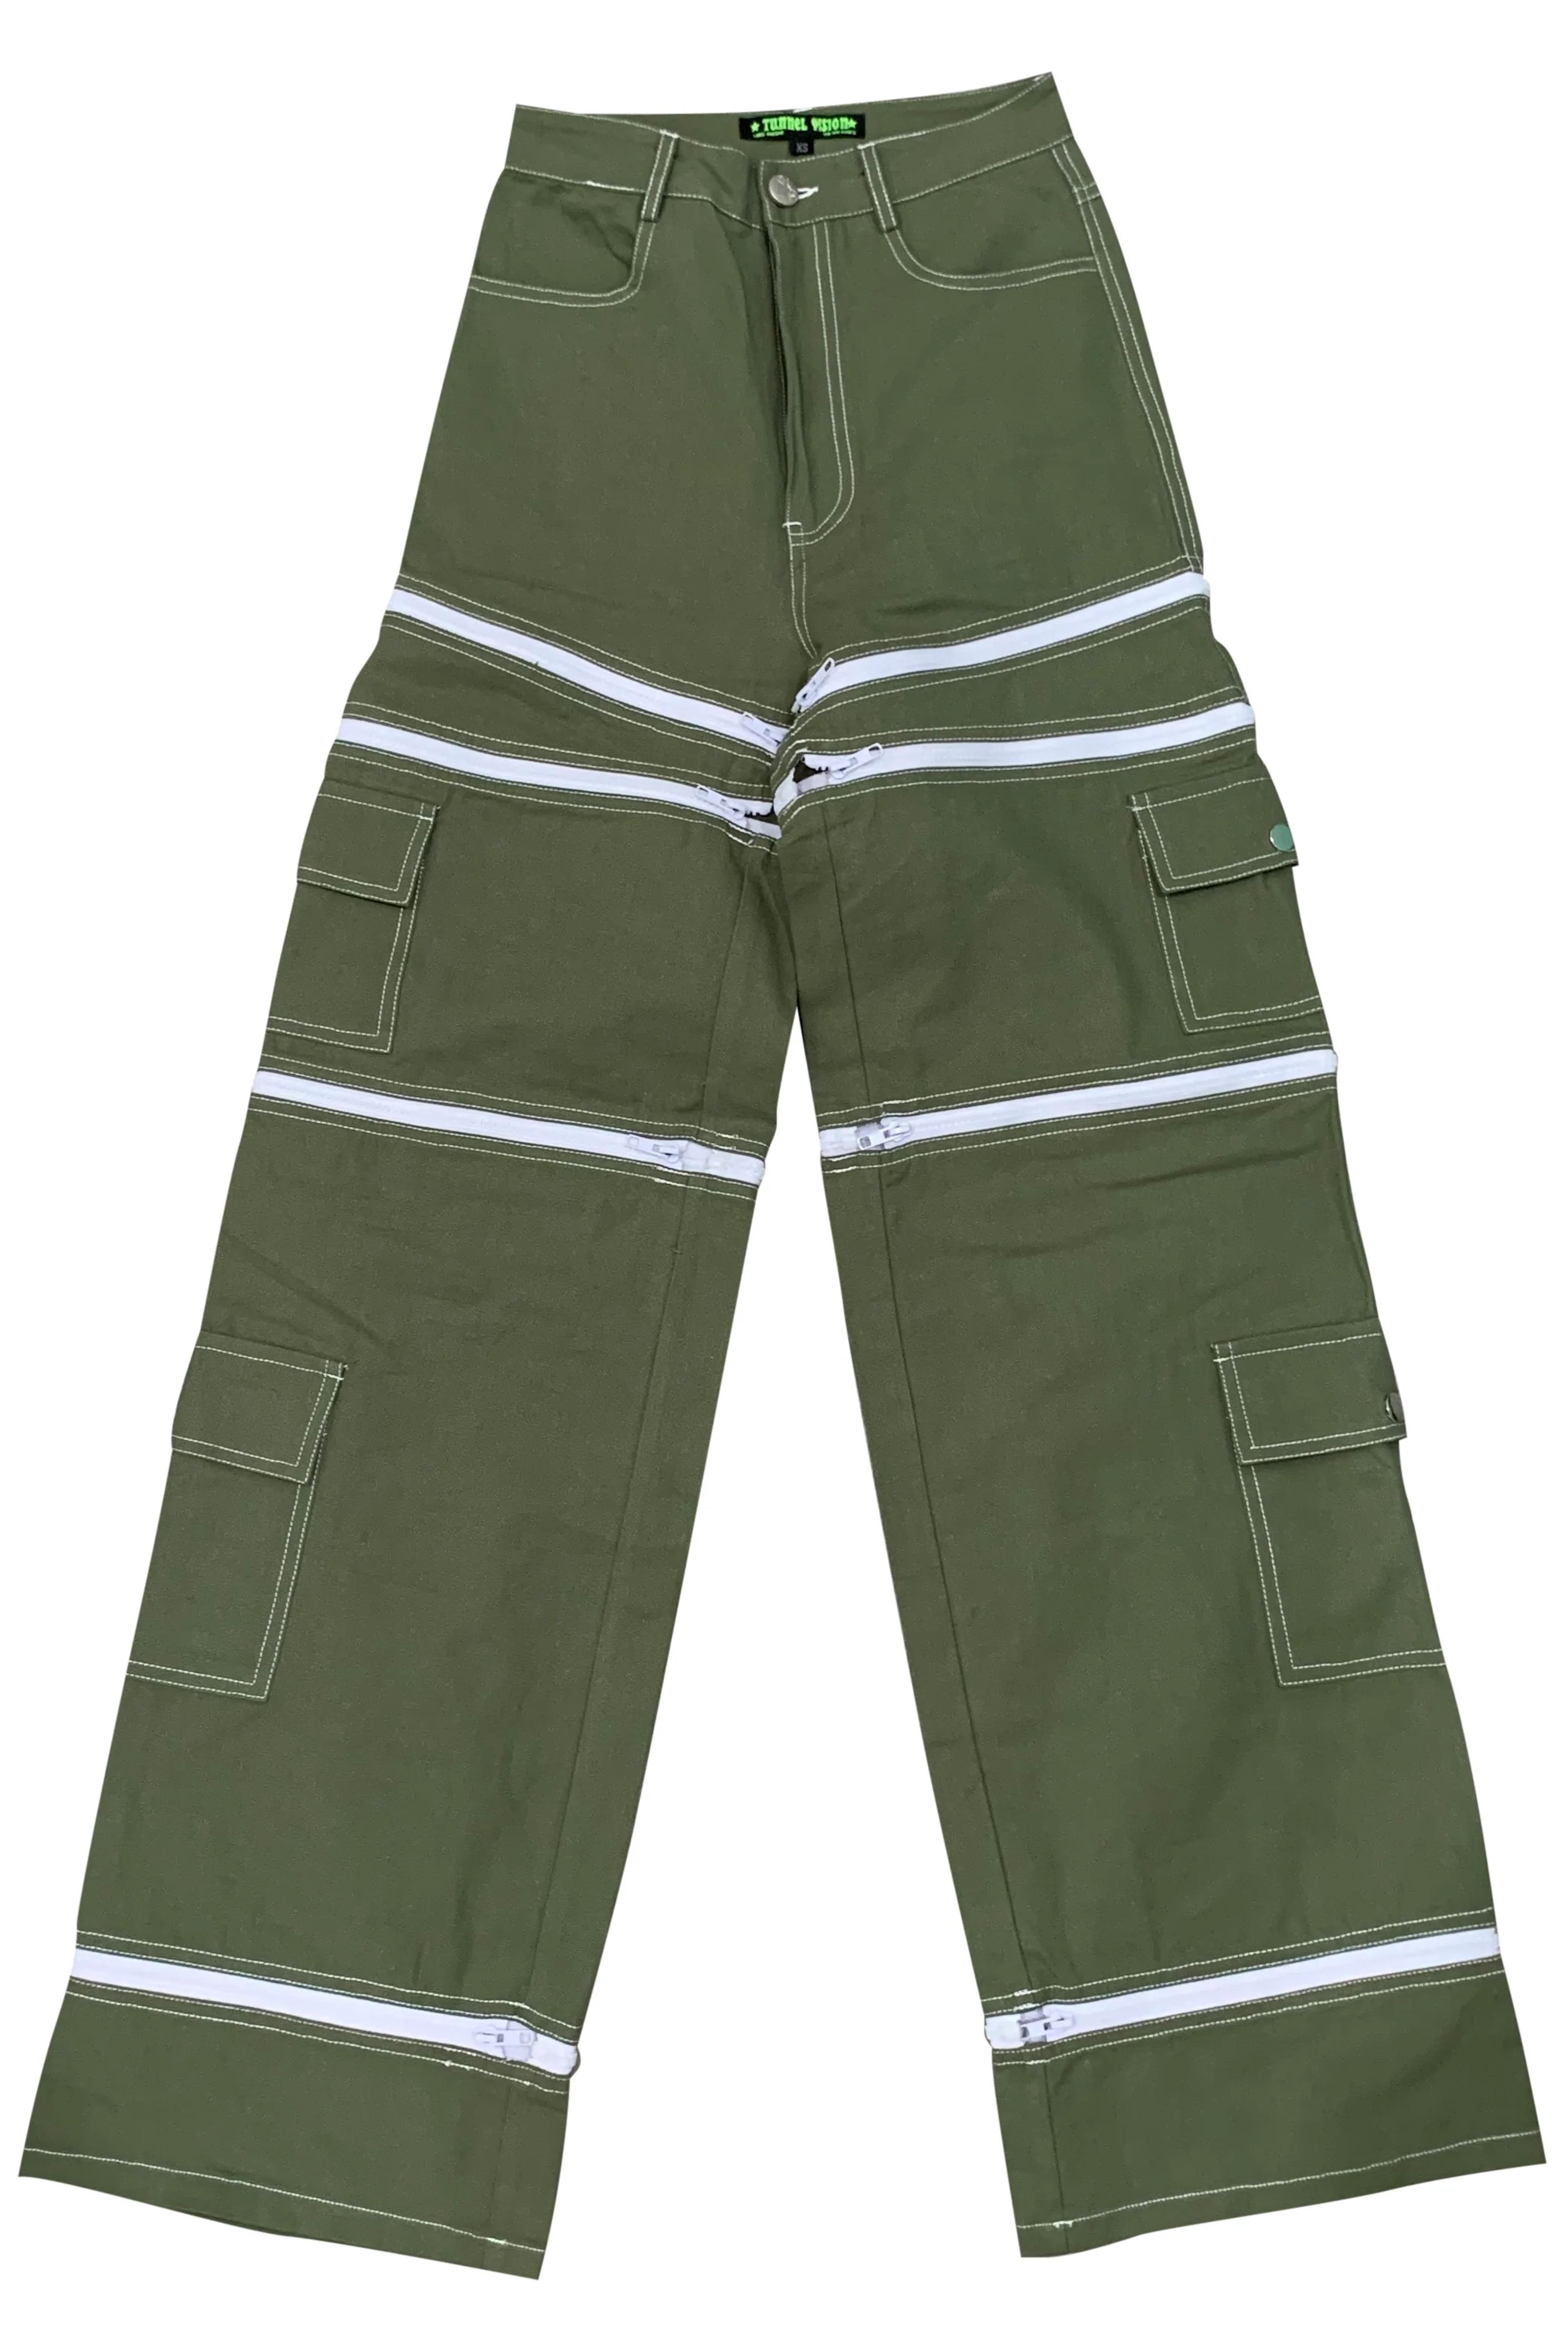 Olive Green 5-in-1 Convertible Zip-Off Cargo Pants